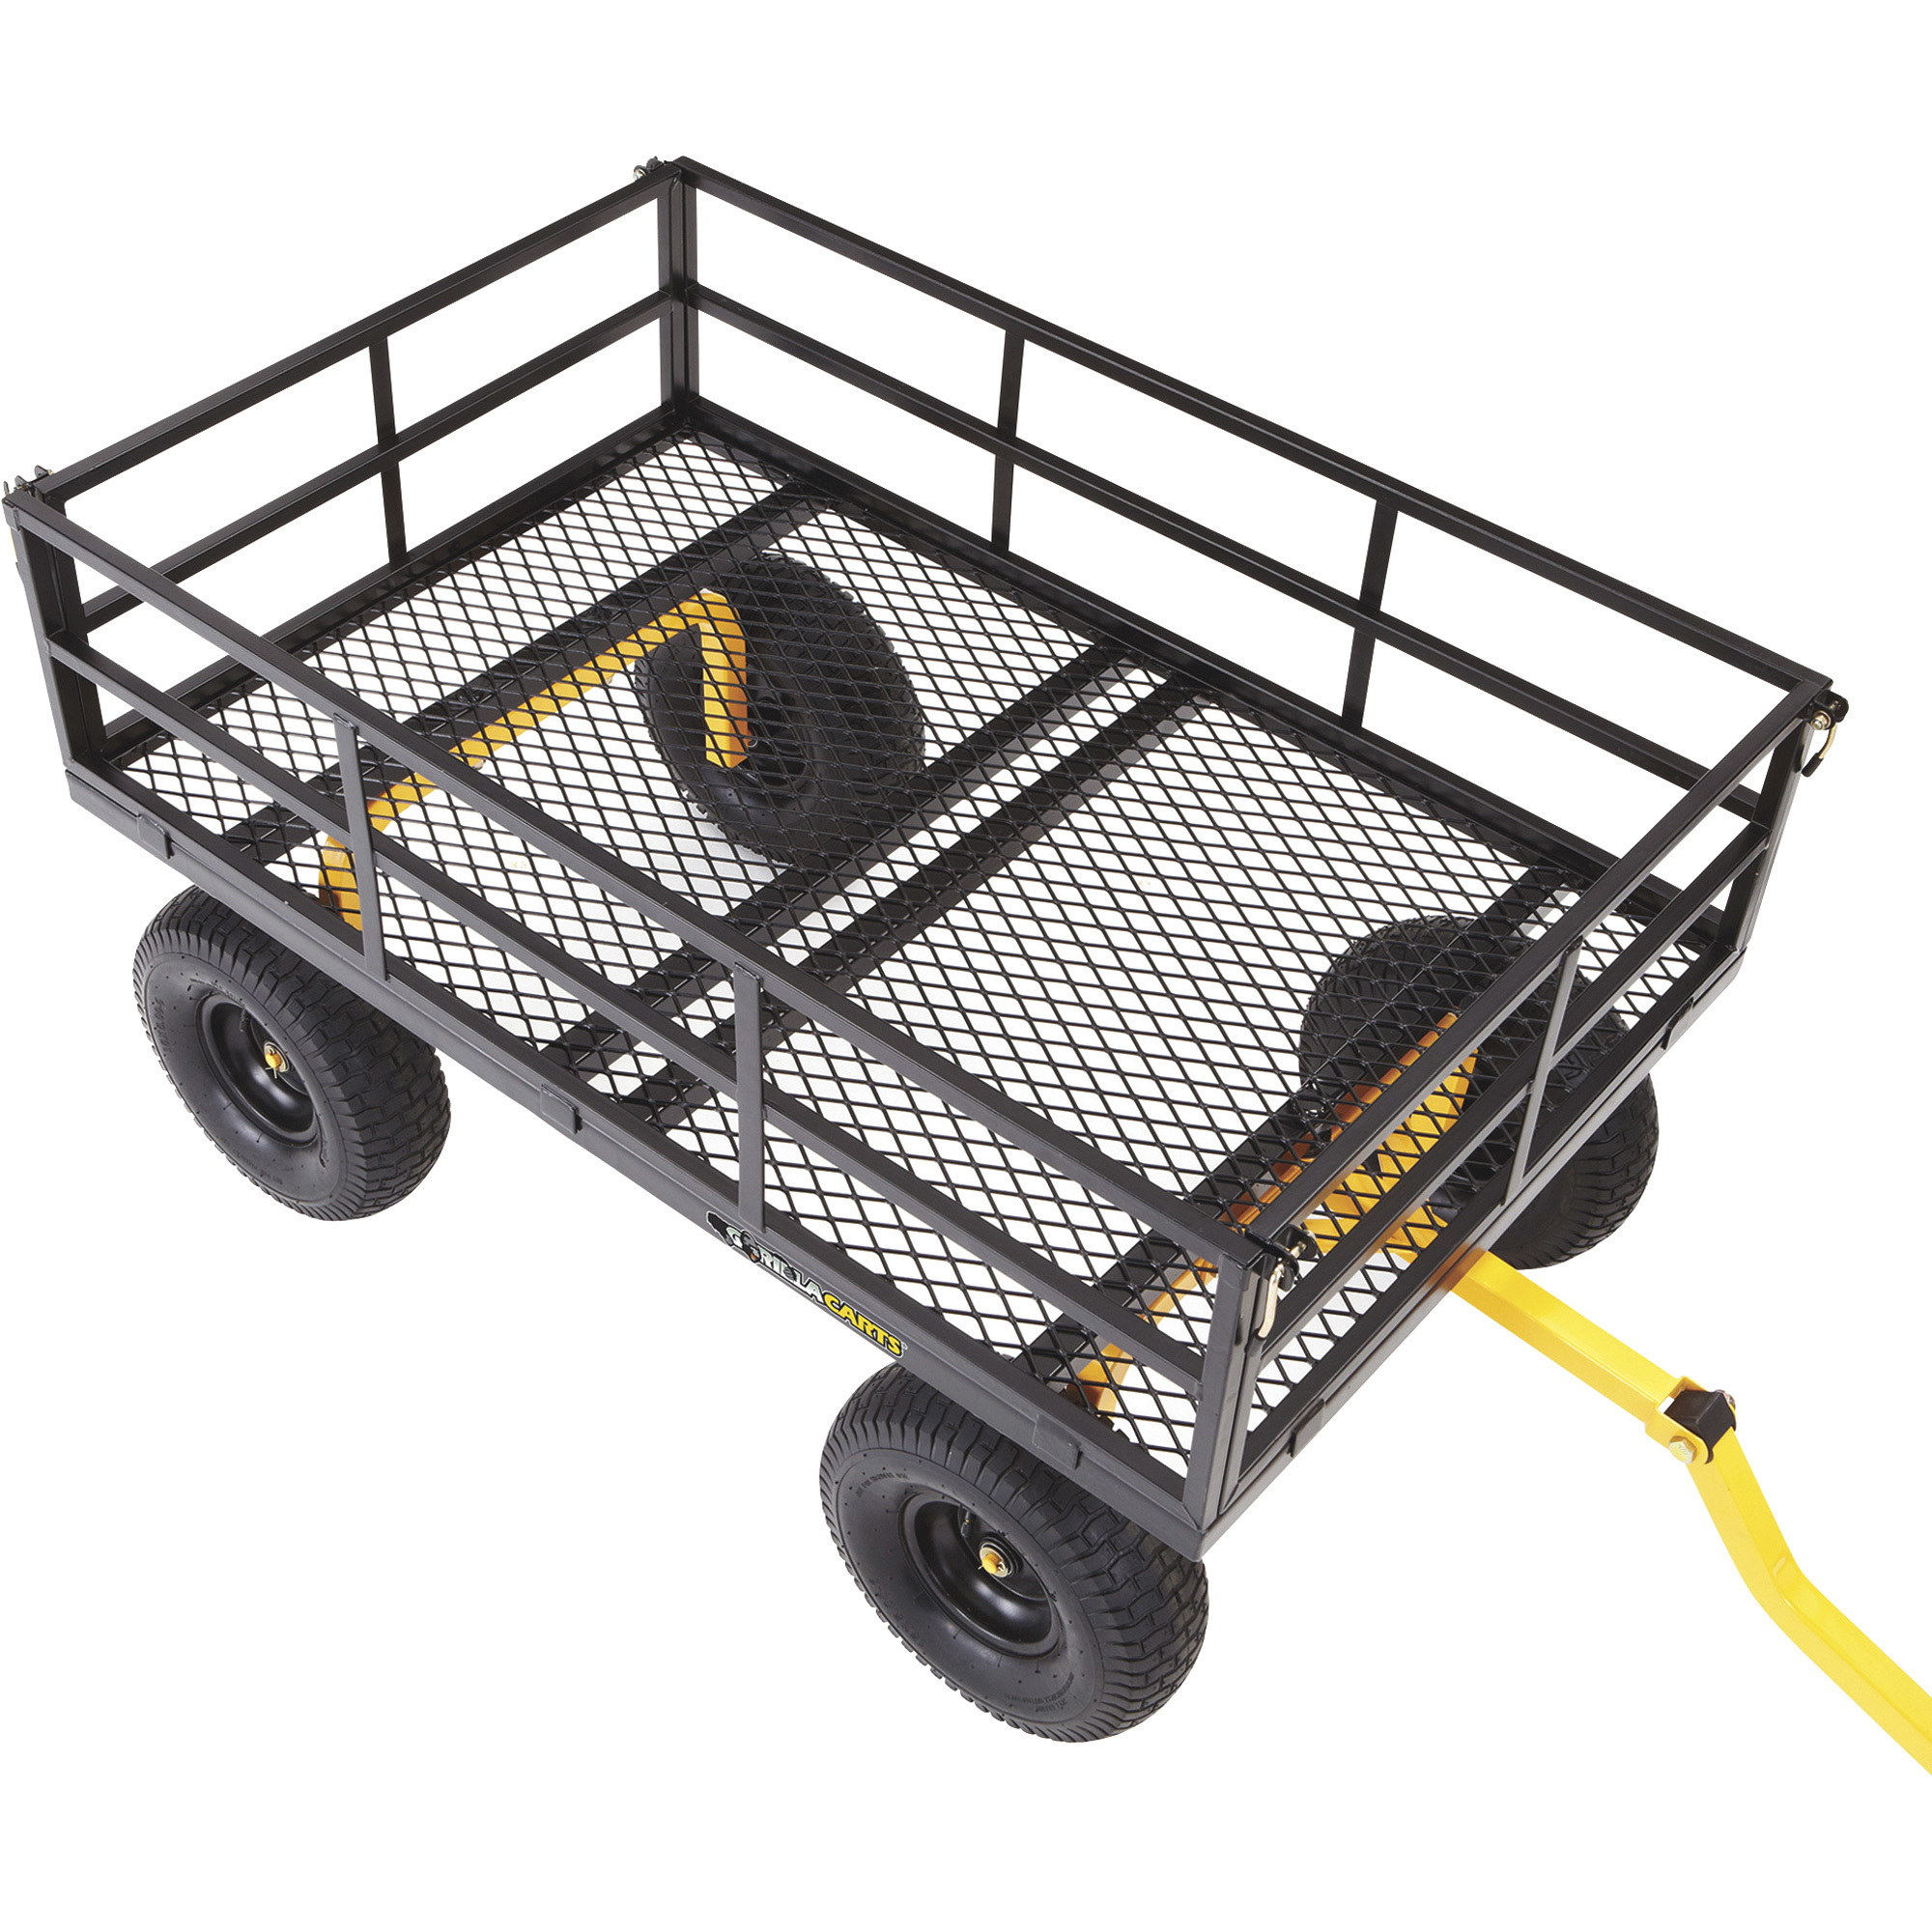 Groundwork 12 Cu. ft. 1,400 lb. Capacity Heavy-Duty Steel Utility Cart